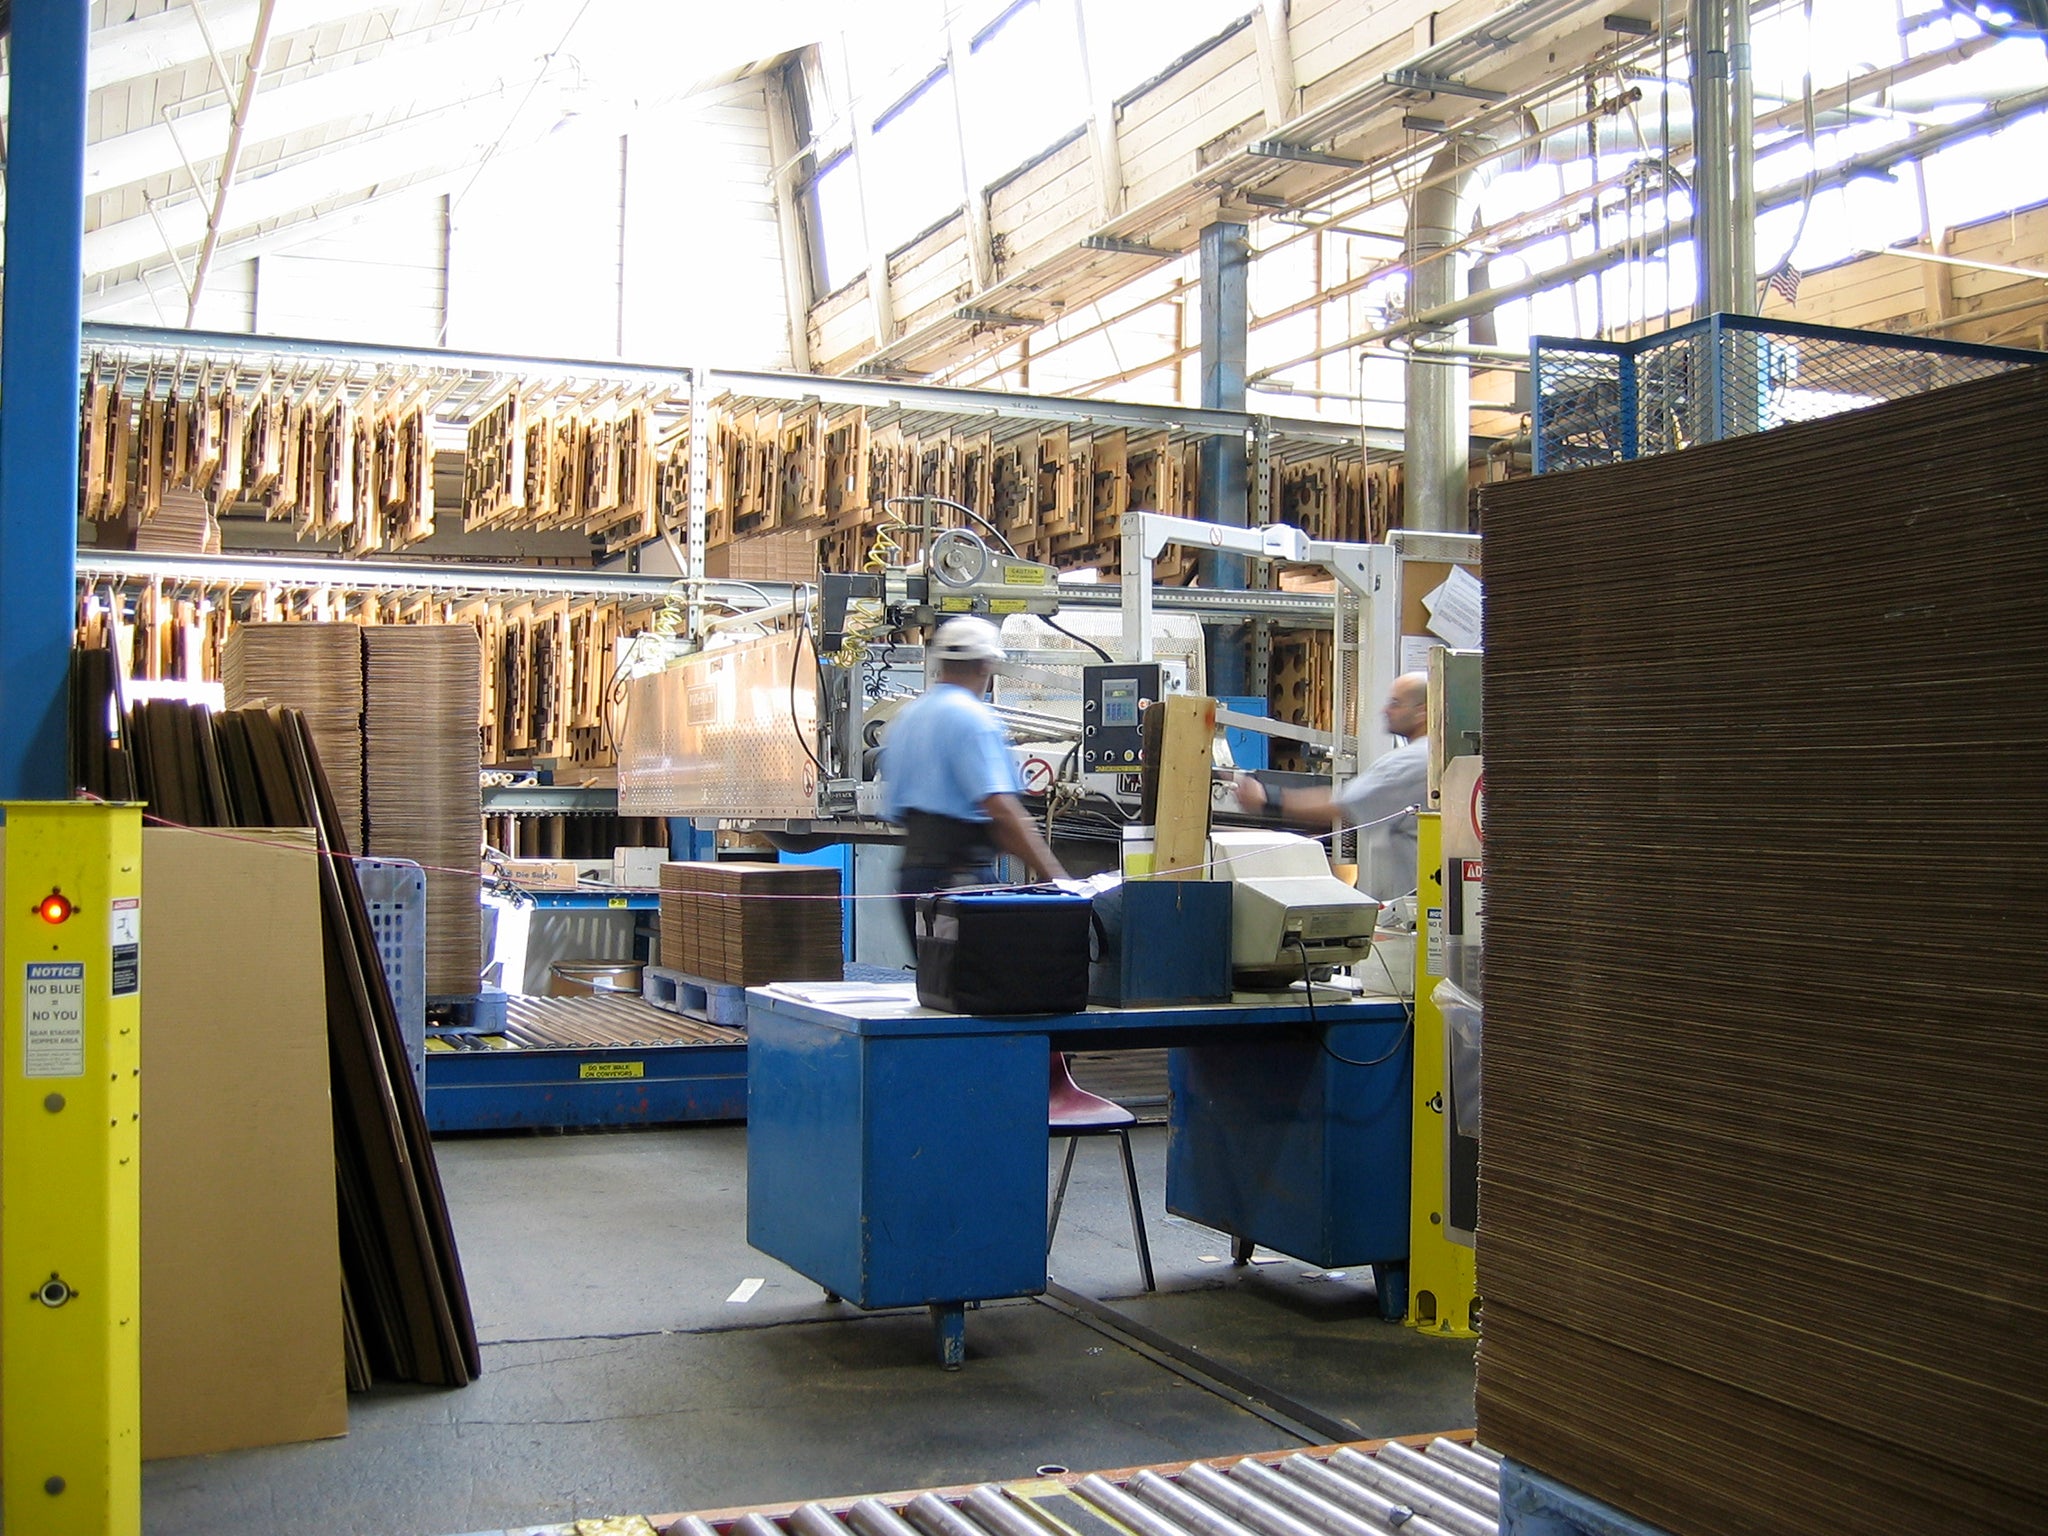 MIO cardboard manufacturing facility